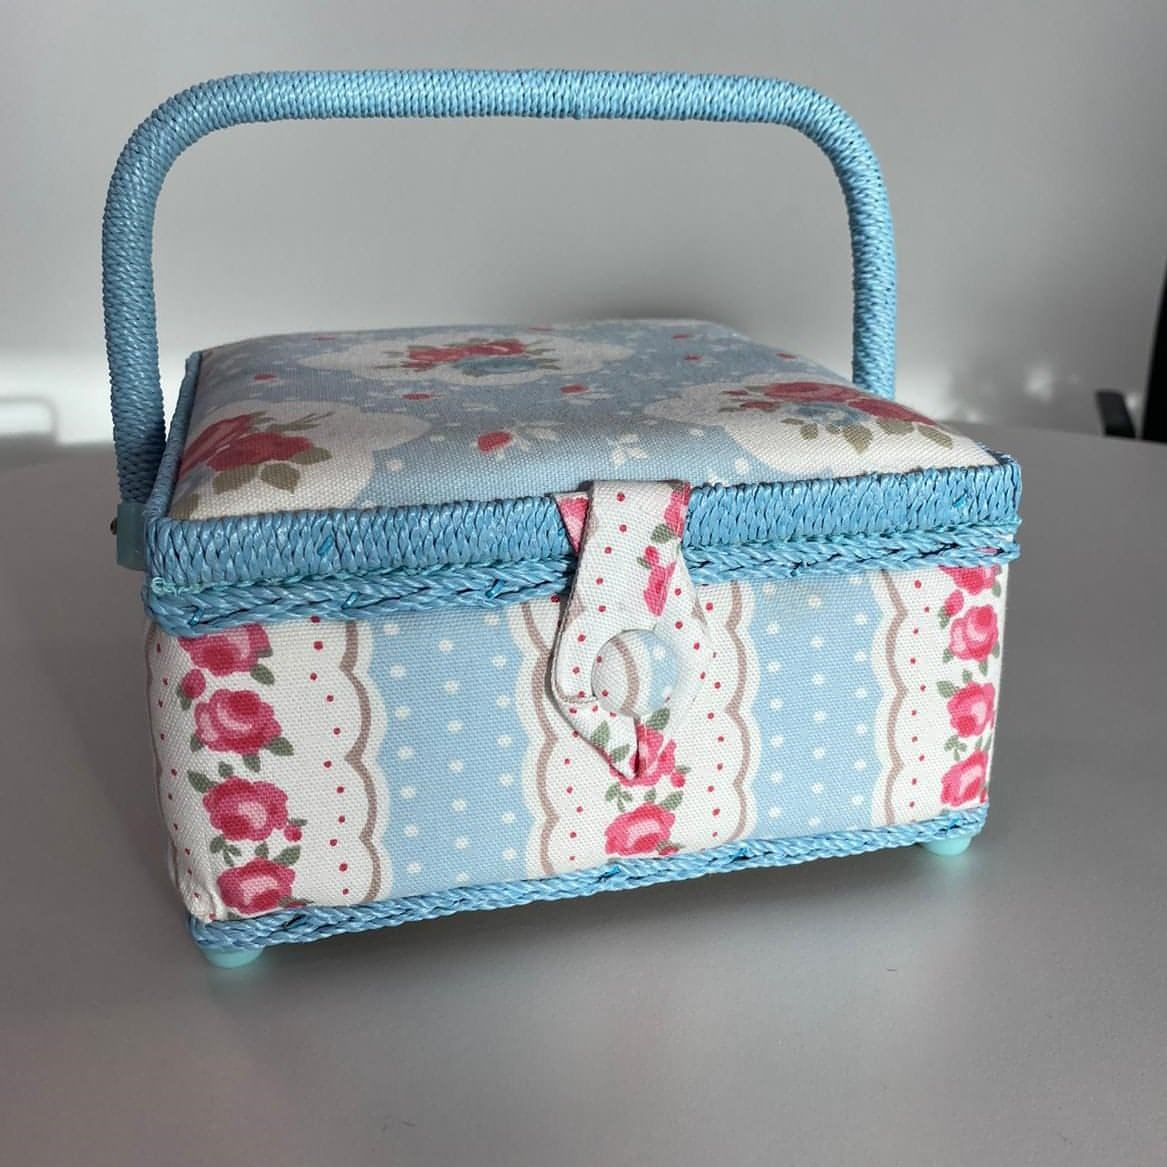 Vintage Sewing Craft Floral Storage Box - Blue